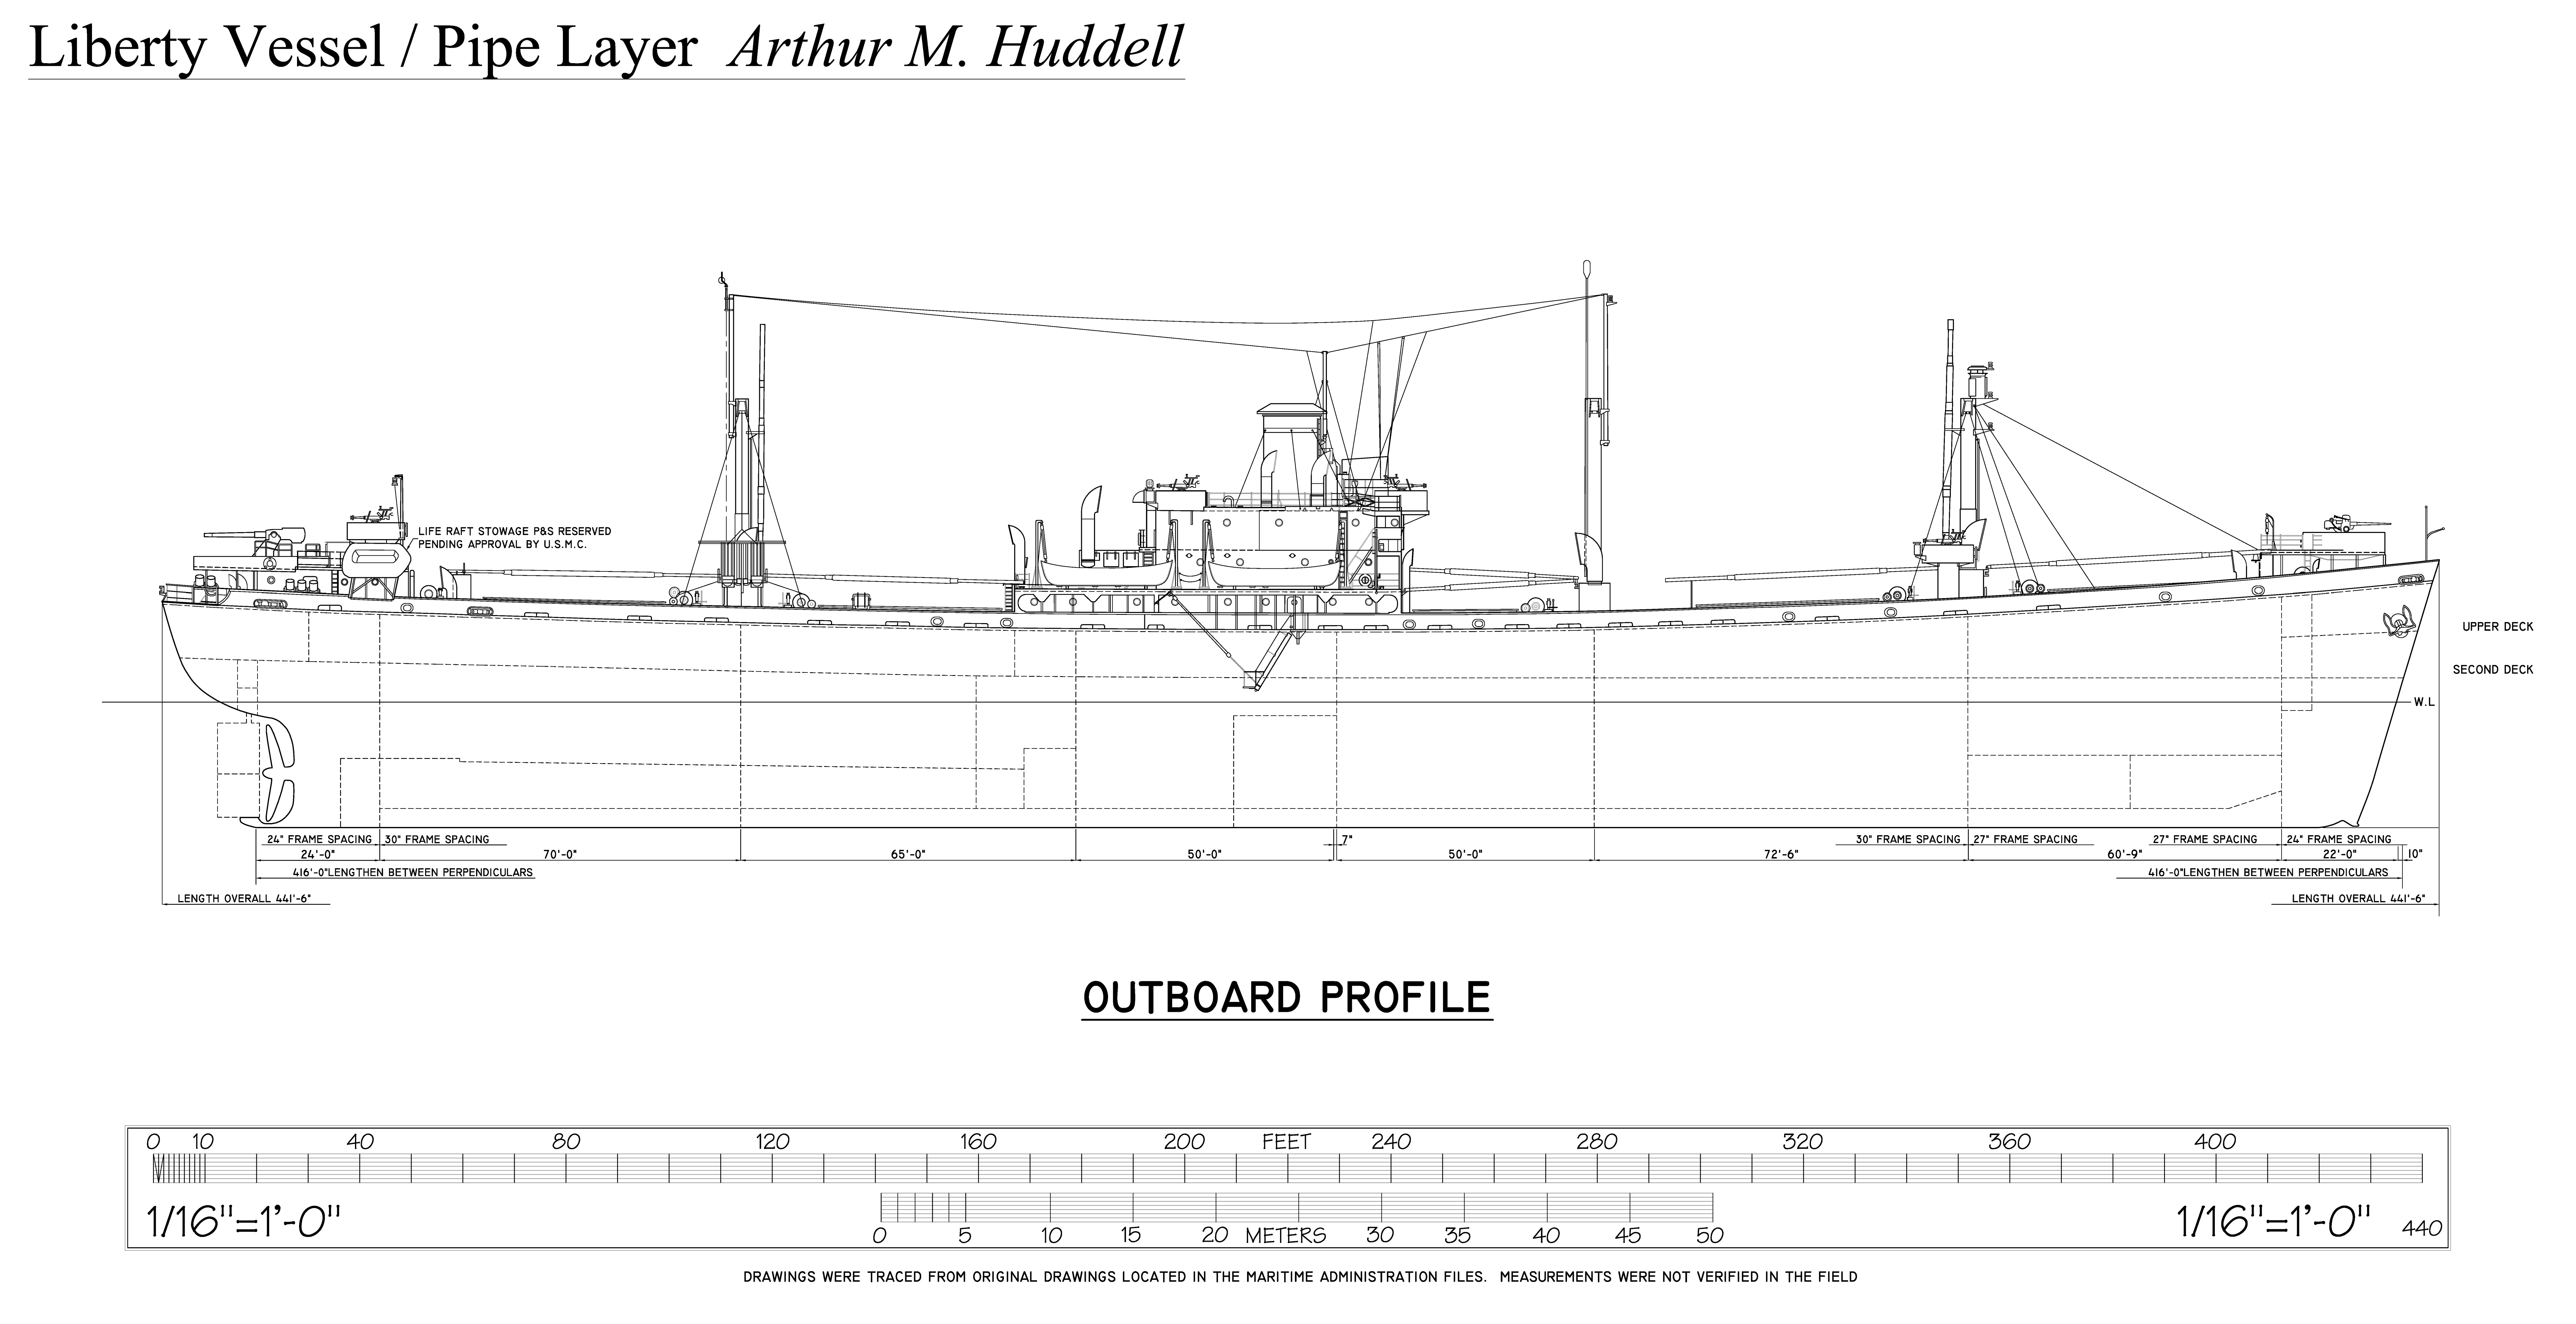 Free ship plans, drawing, Liberty Ship Arthur M. Huddell, ship, model, model building, scratch building, ship model kit,